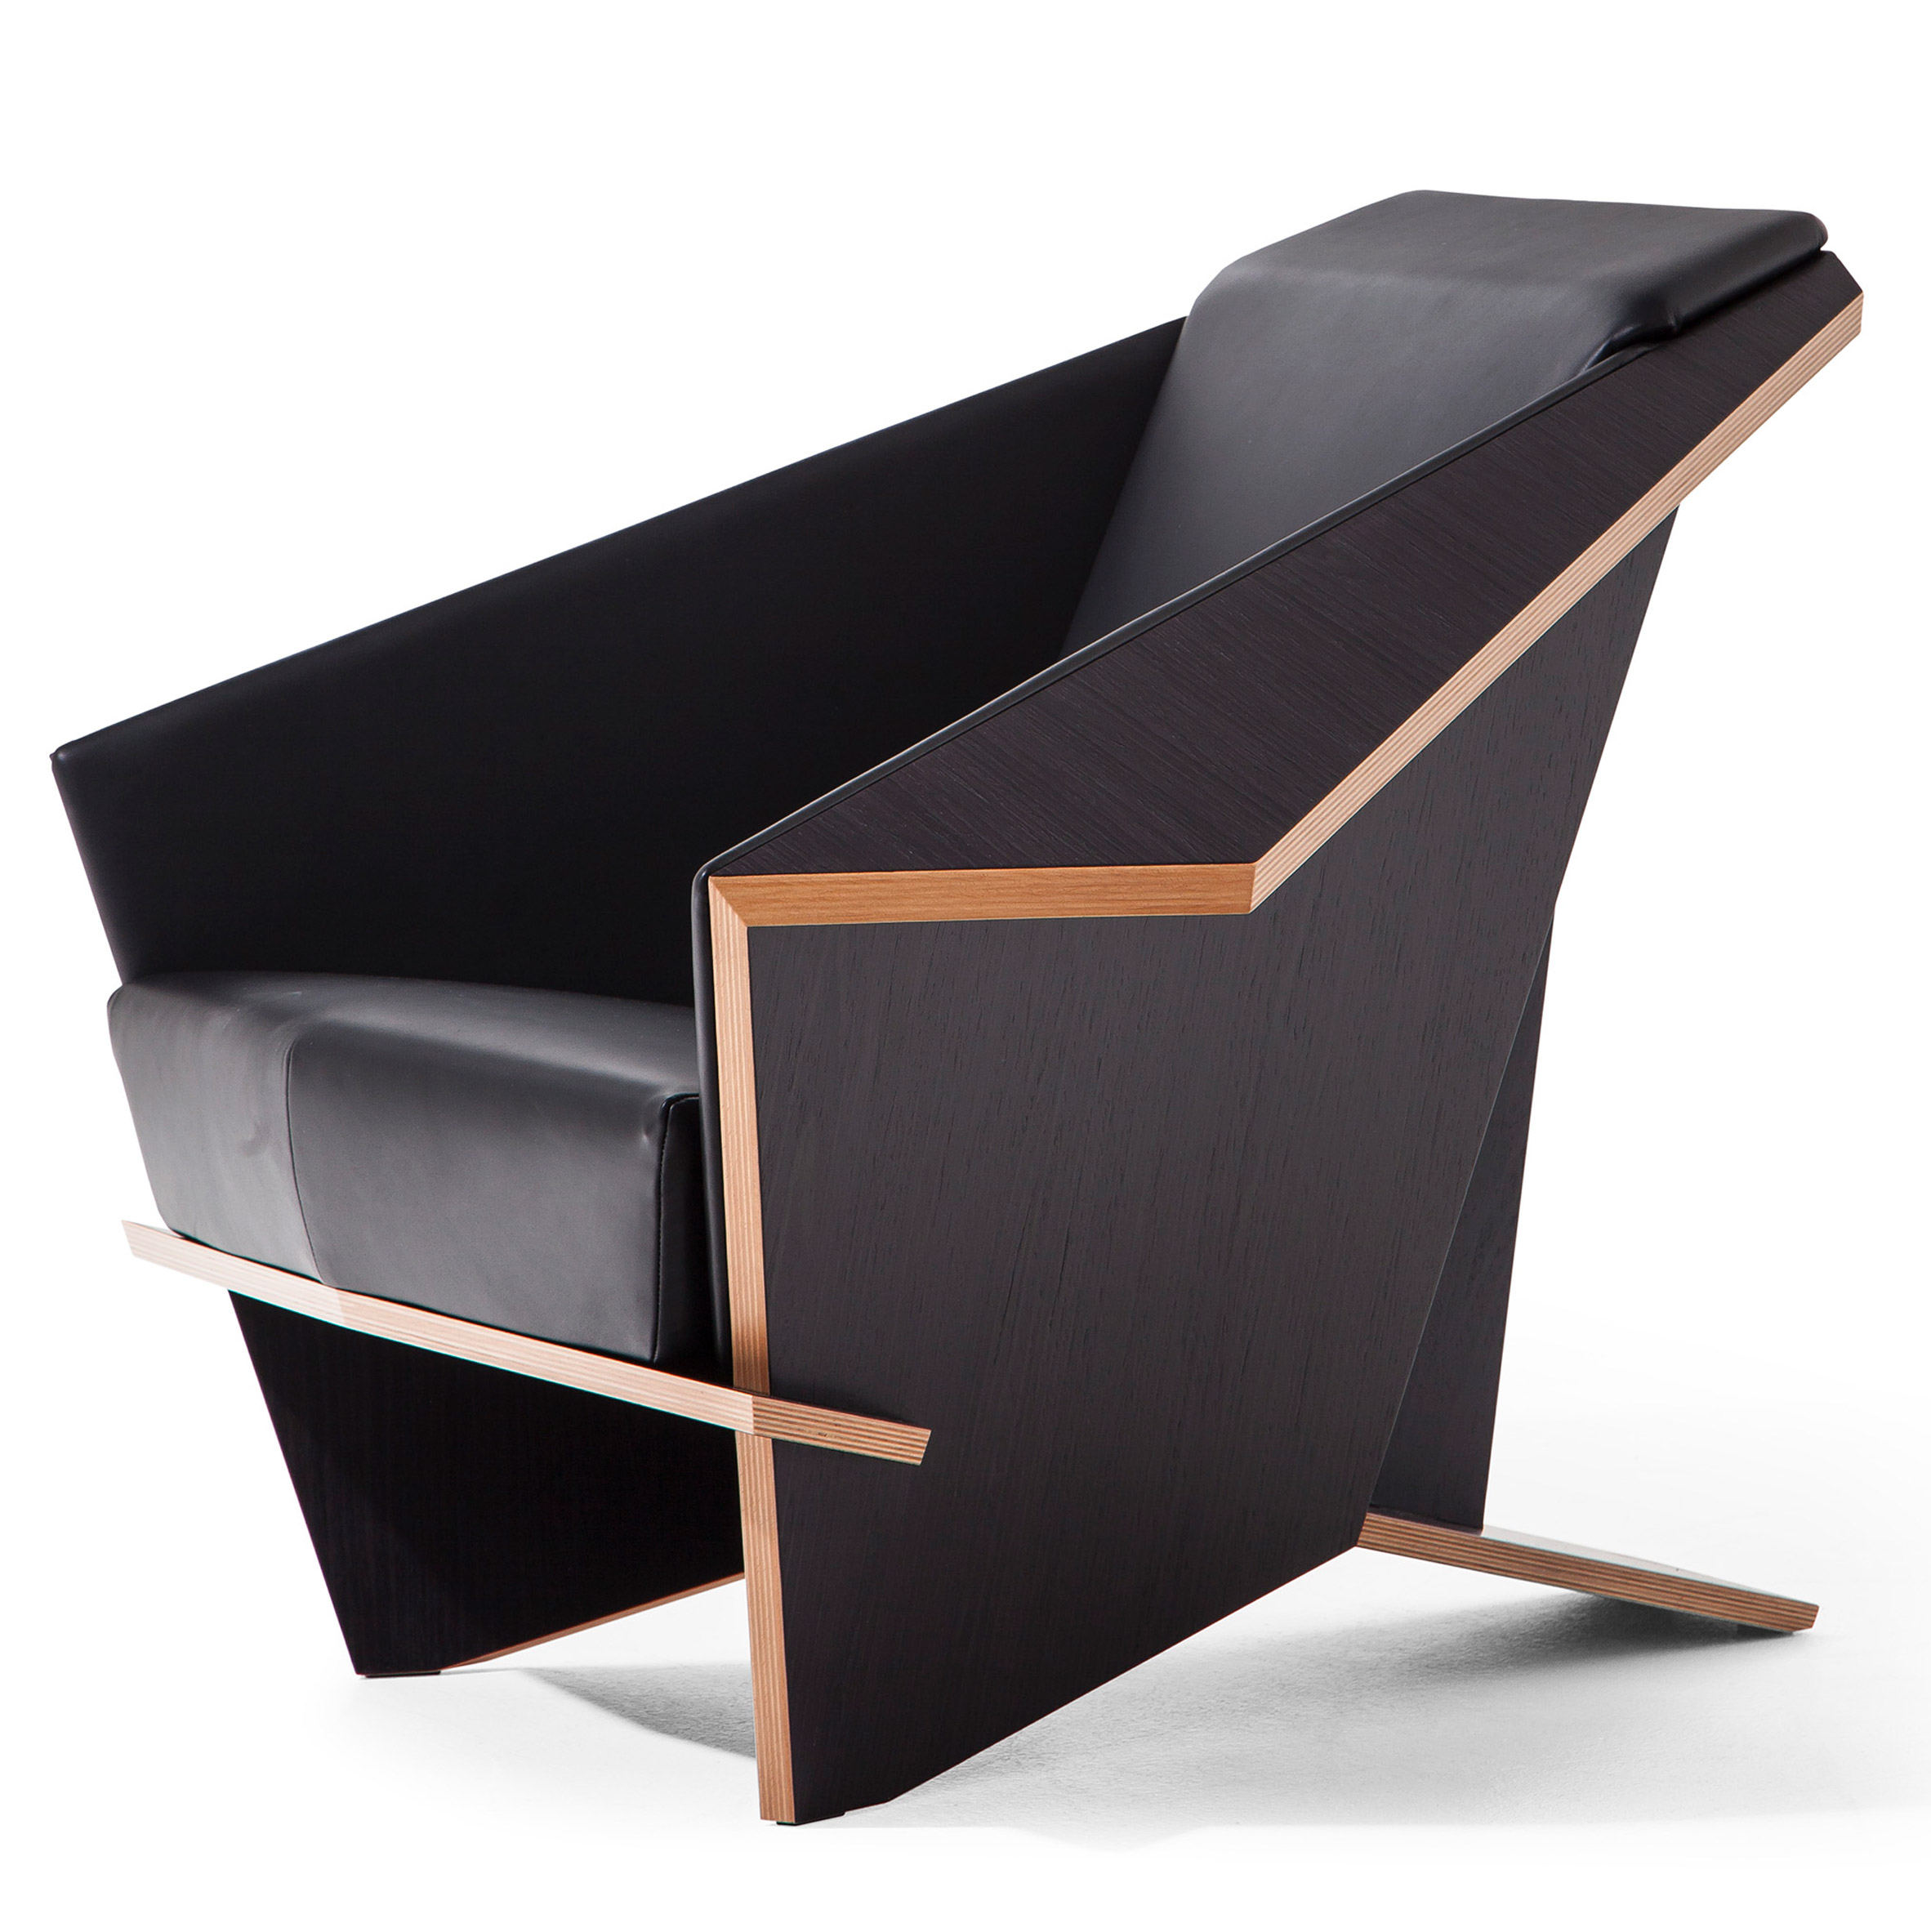 Cassina reissues Frank Lloyd Wright's Taliesin 1 chair